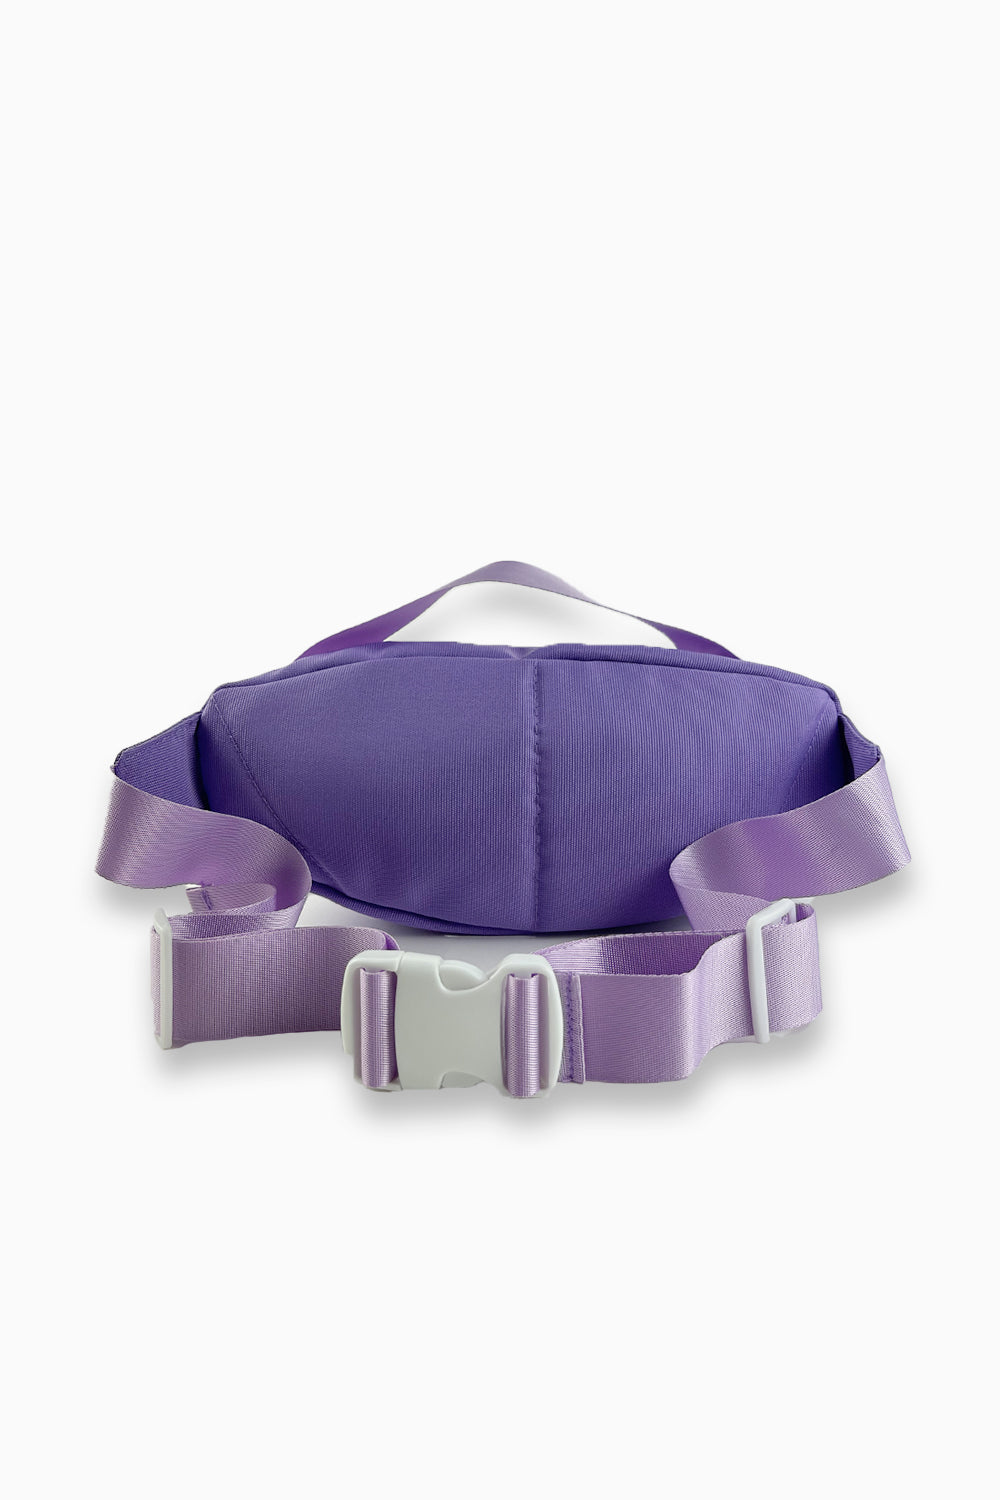 edc purple fanny pack back view